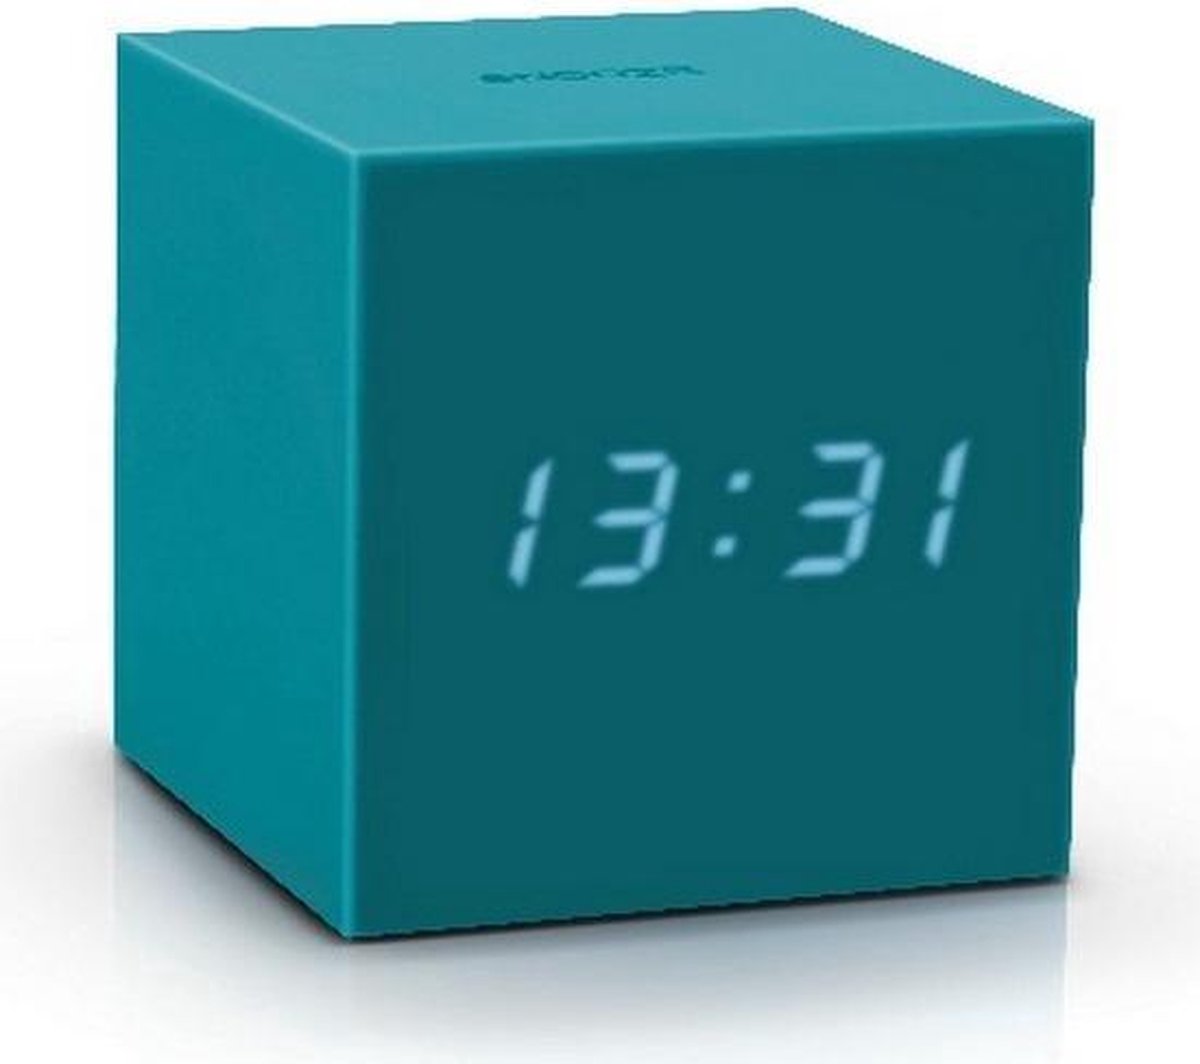 Gravity Click Clock wekker blauw-groen